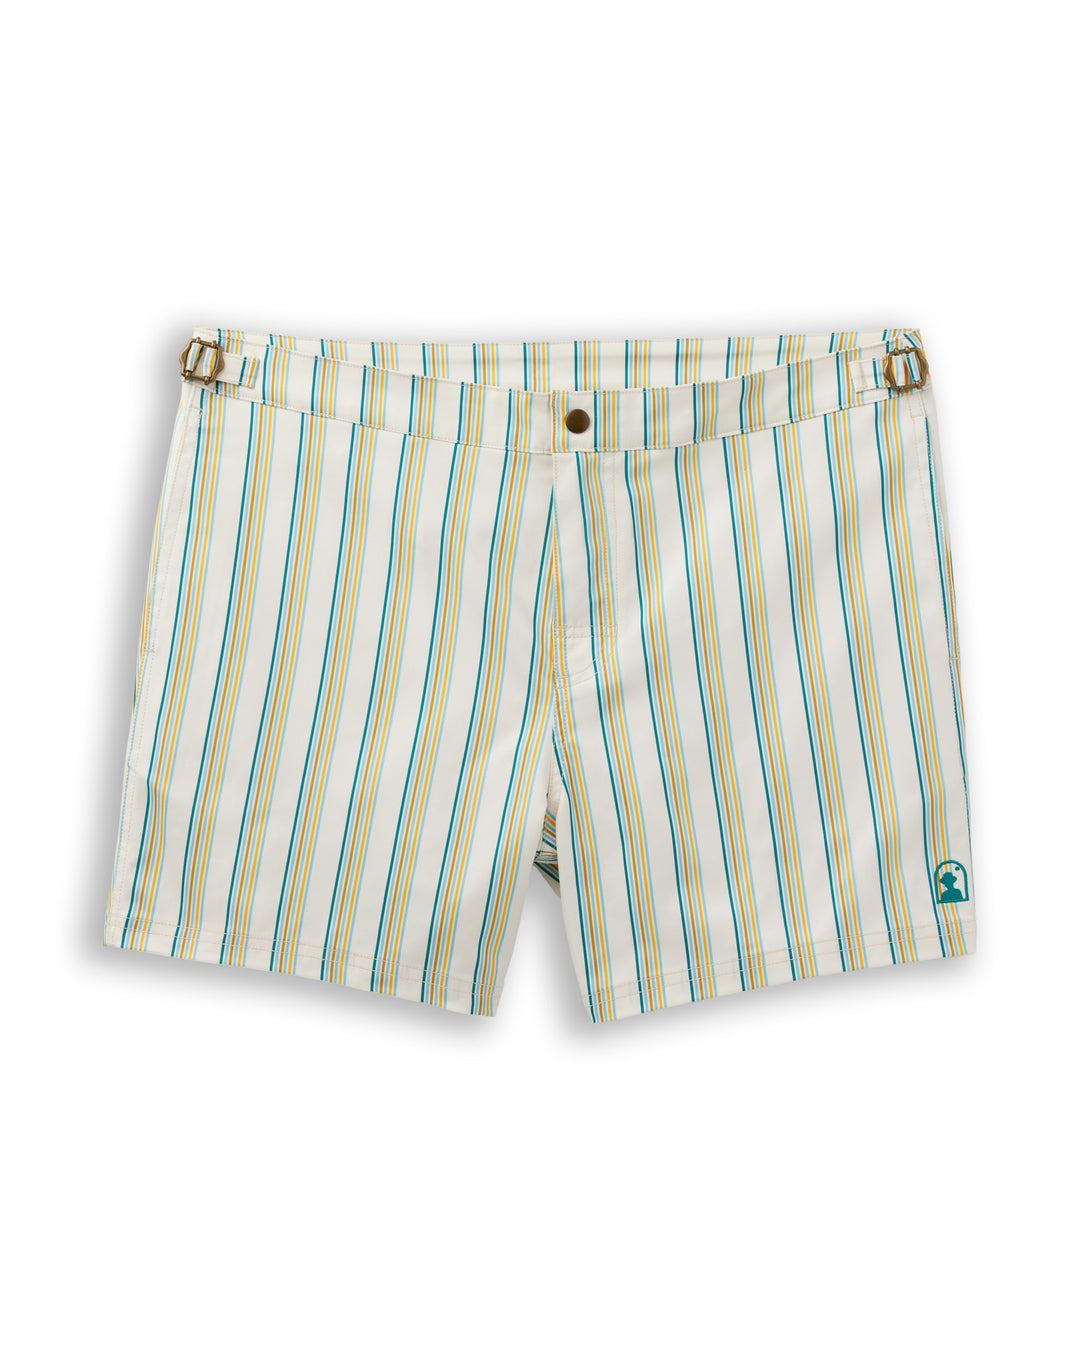 Dandy Del Mar's best belt shorts